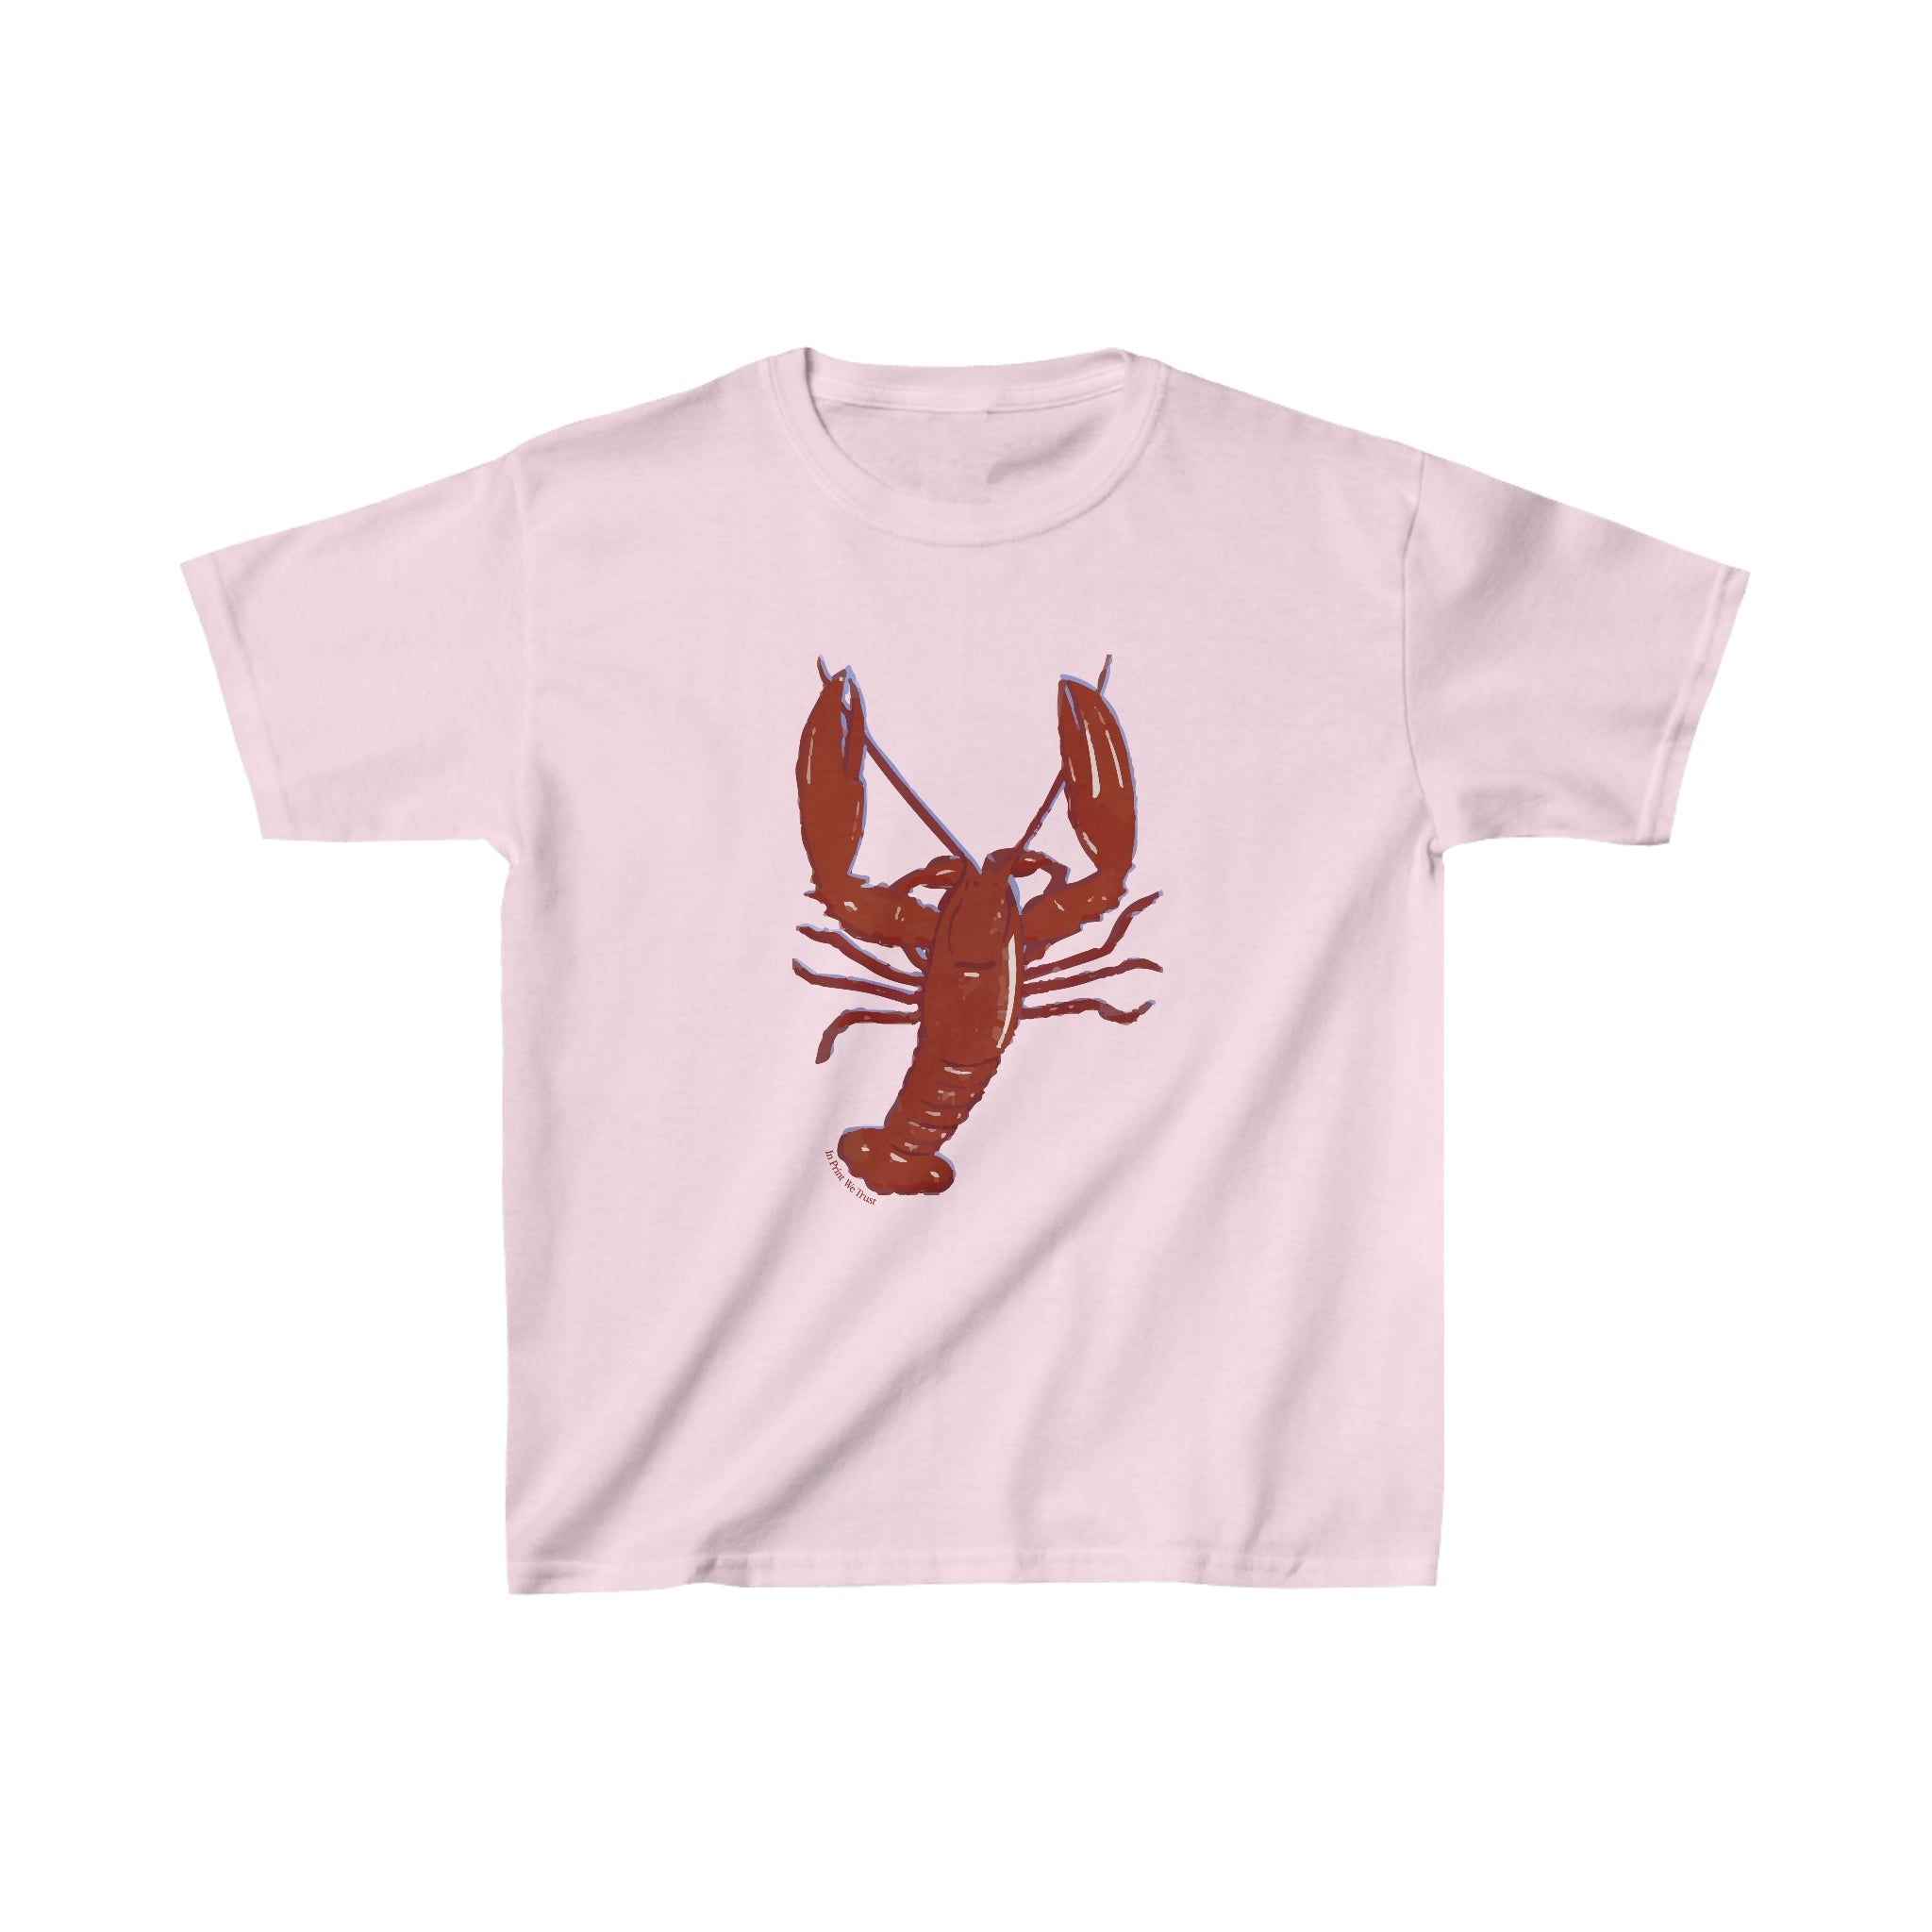 'You're My Lobster' baby tee - In Print We Trust